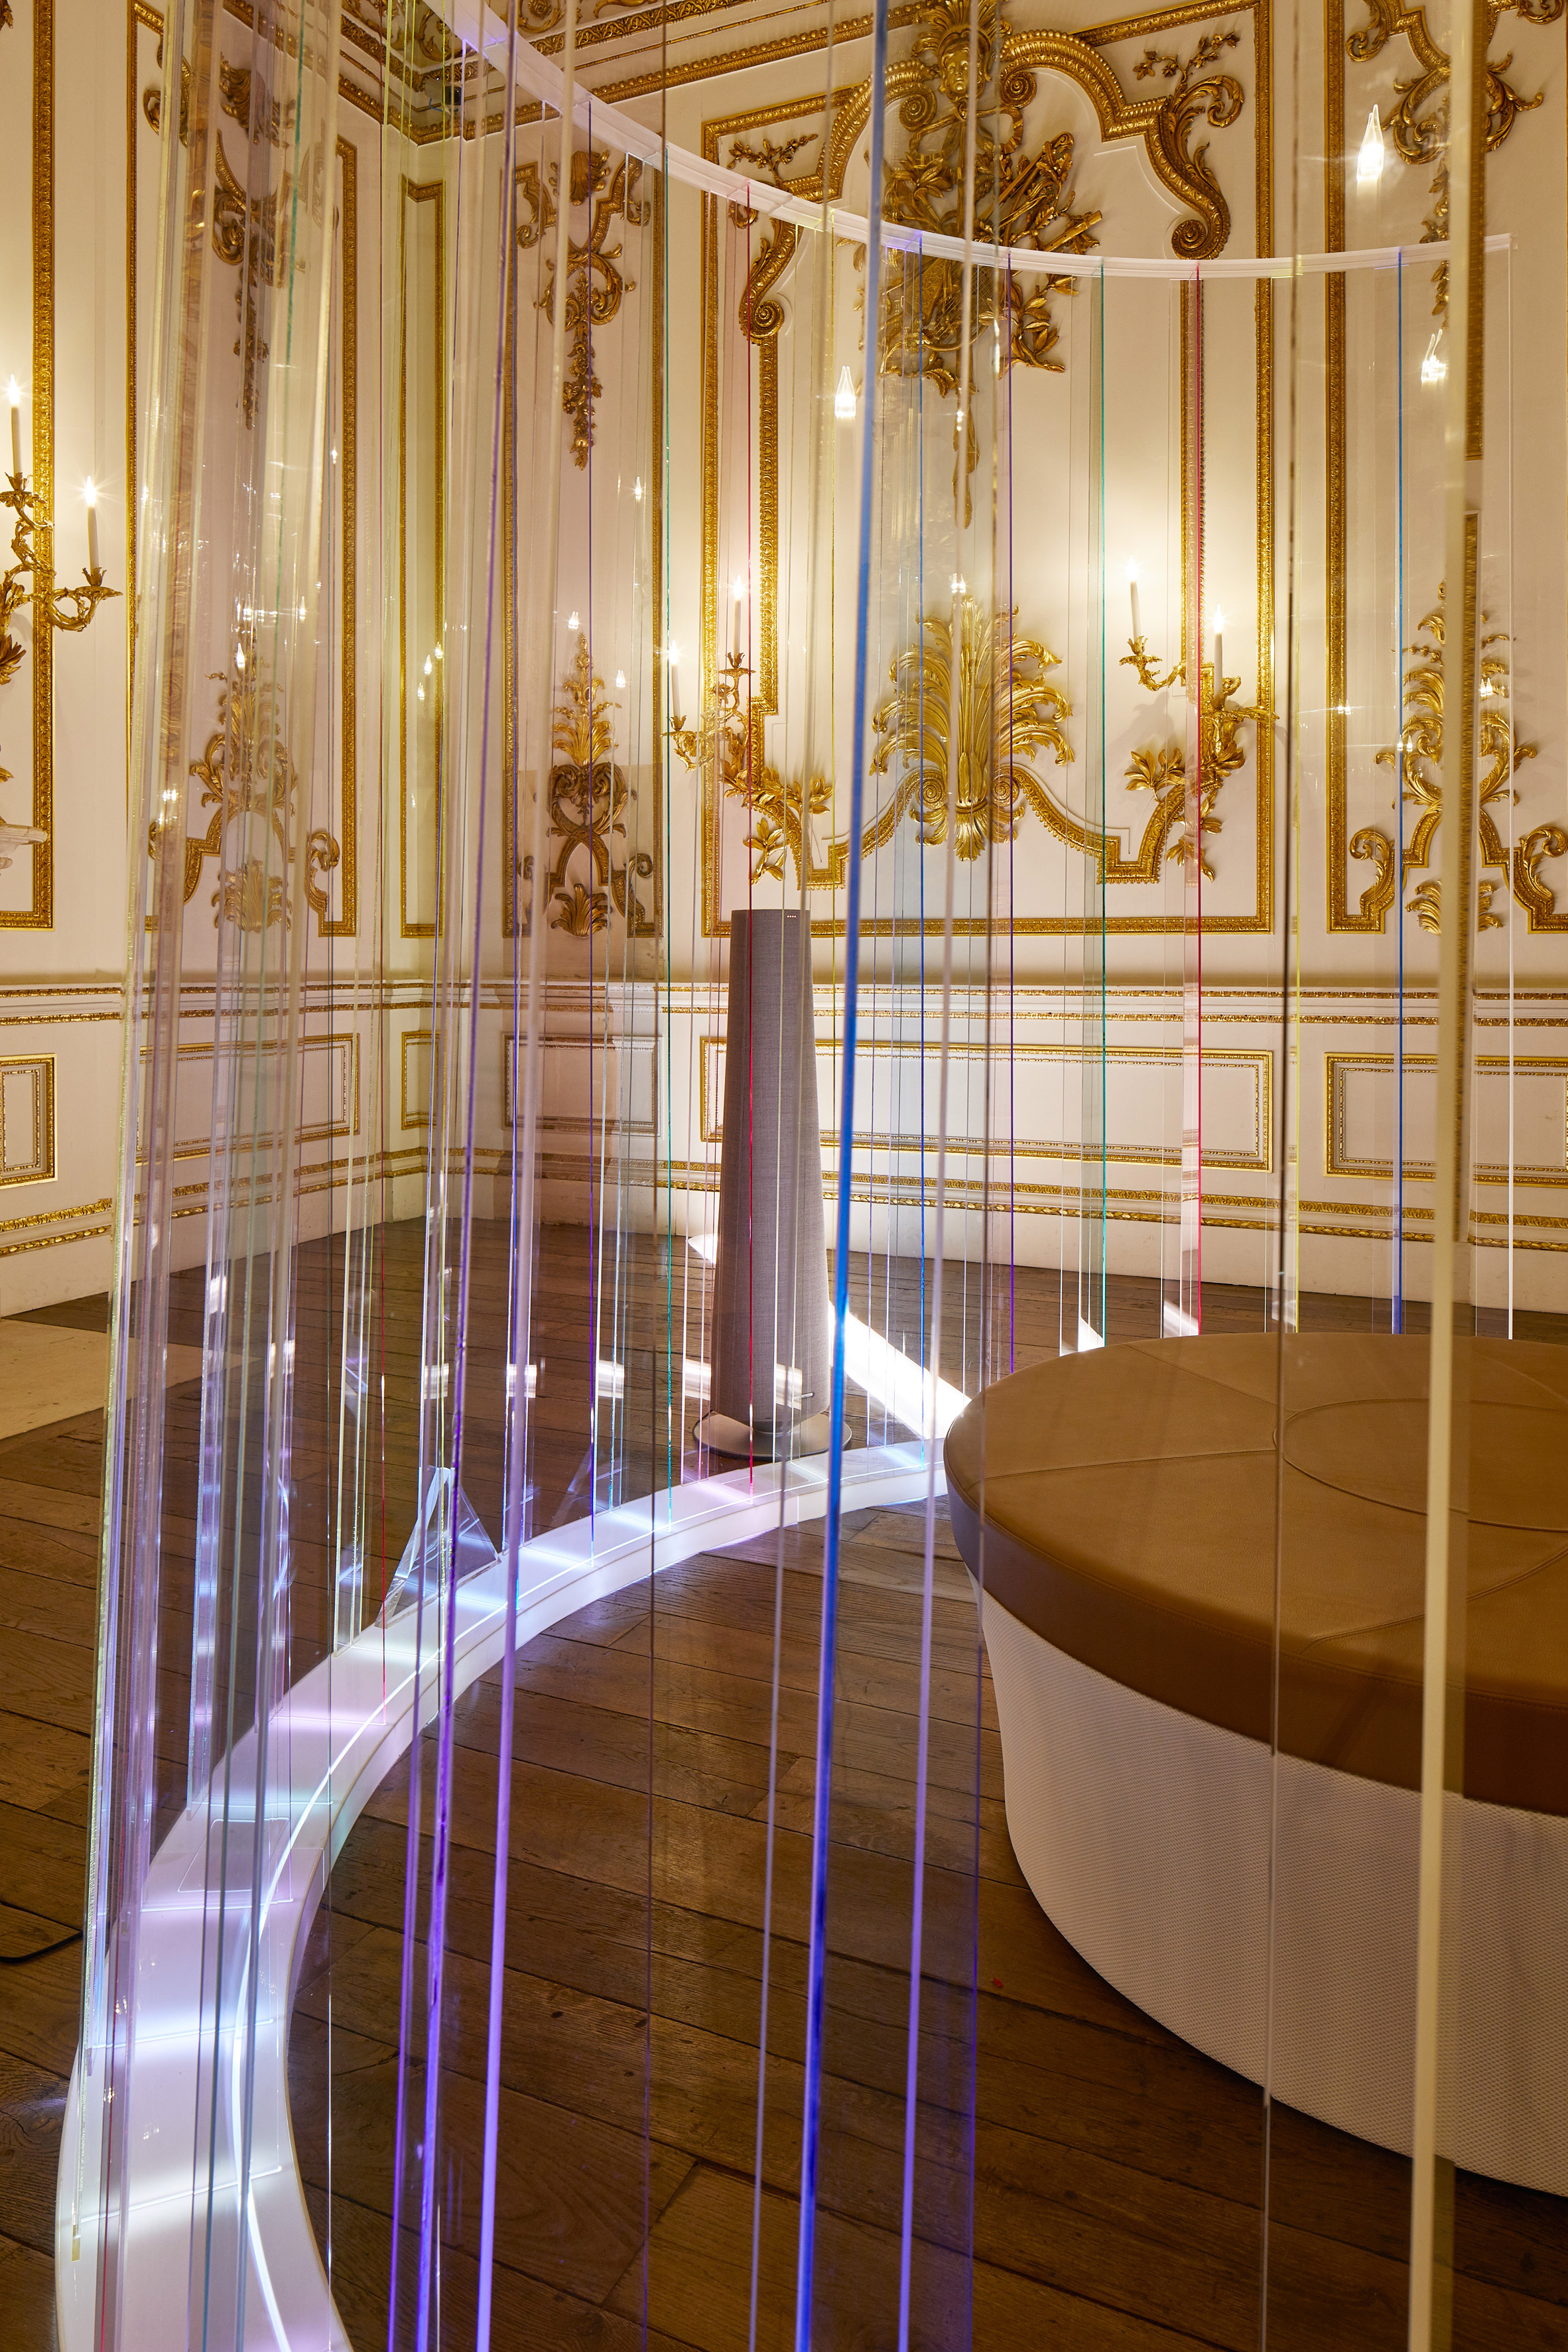 Arvo Pärt's music is the focus of a multi-sensory installation at the V&A